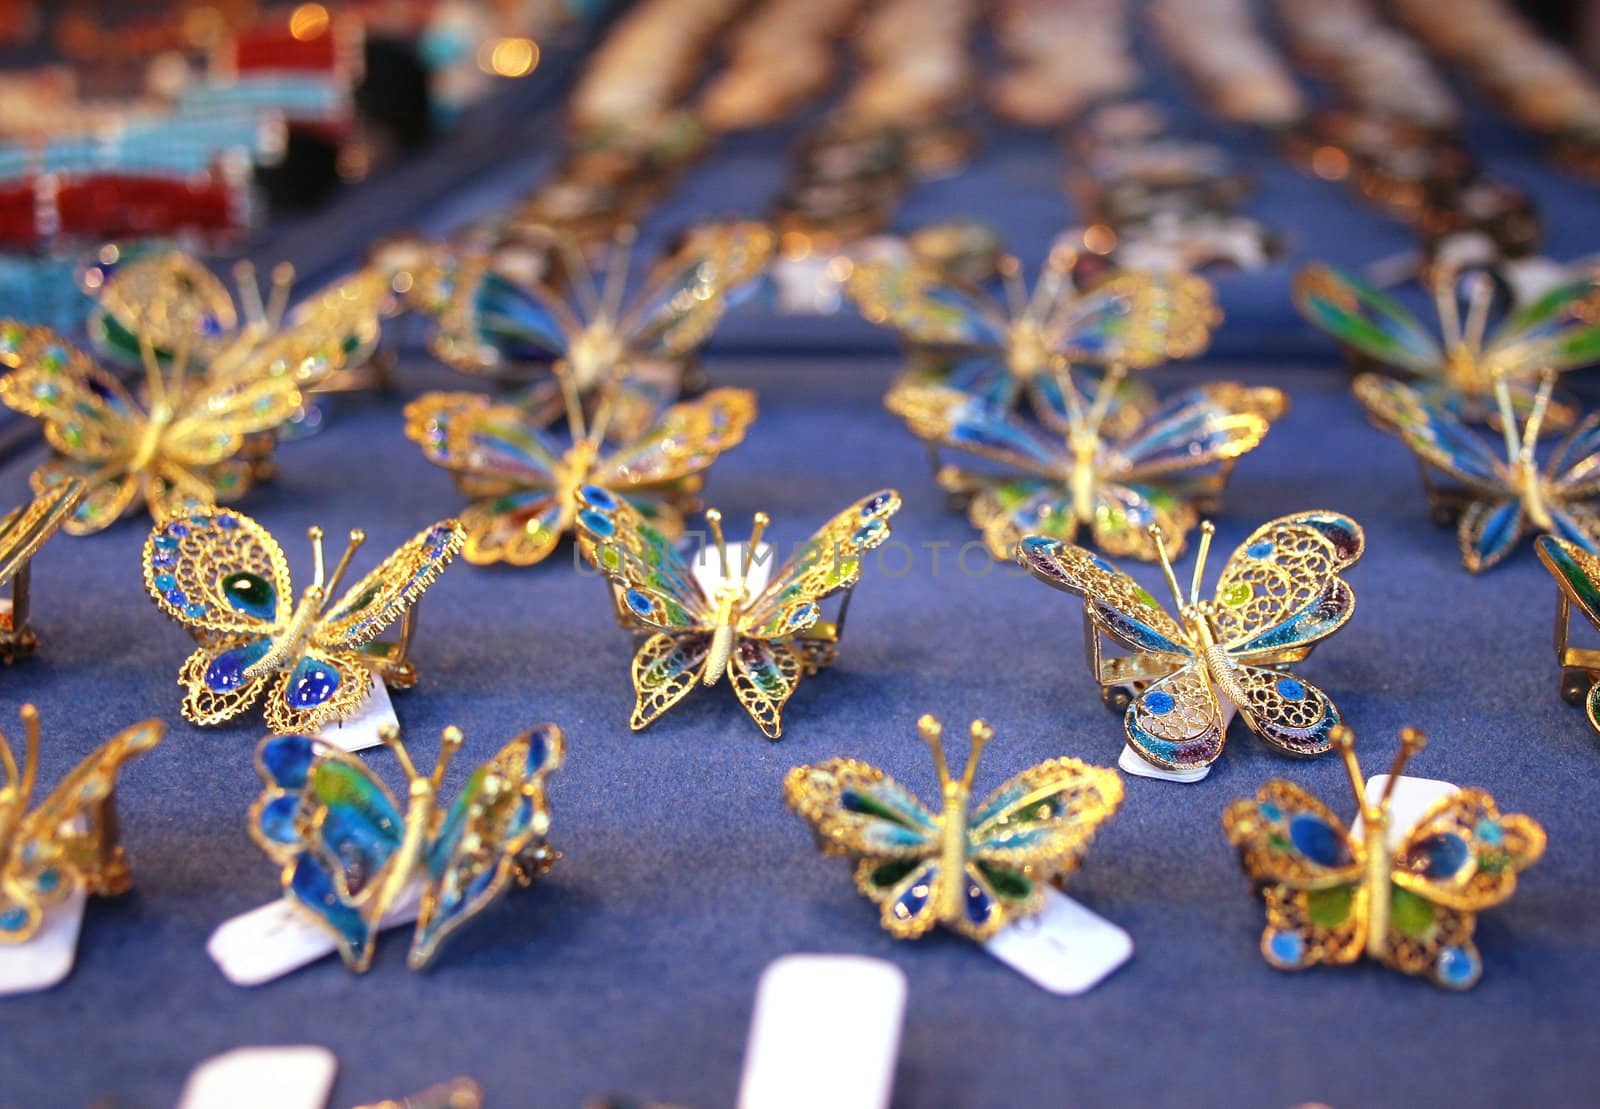 Jewellery shaped as butterflies by cristiaciobanu